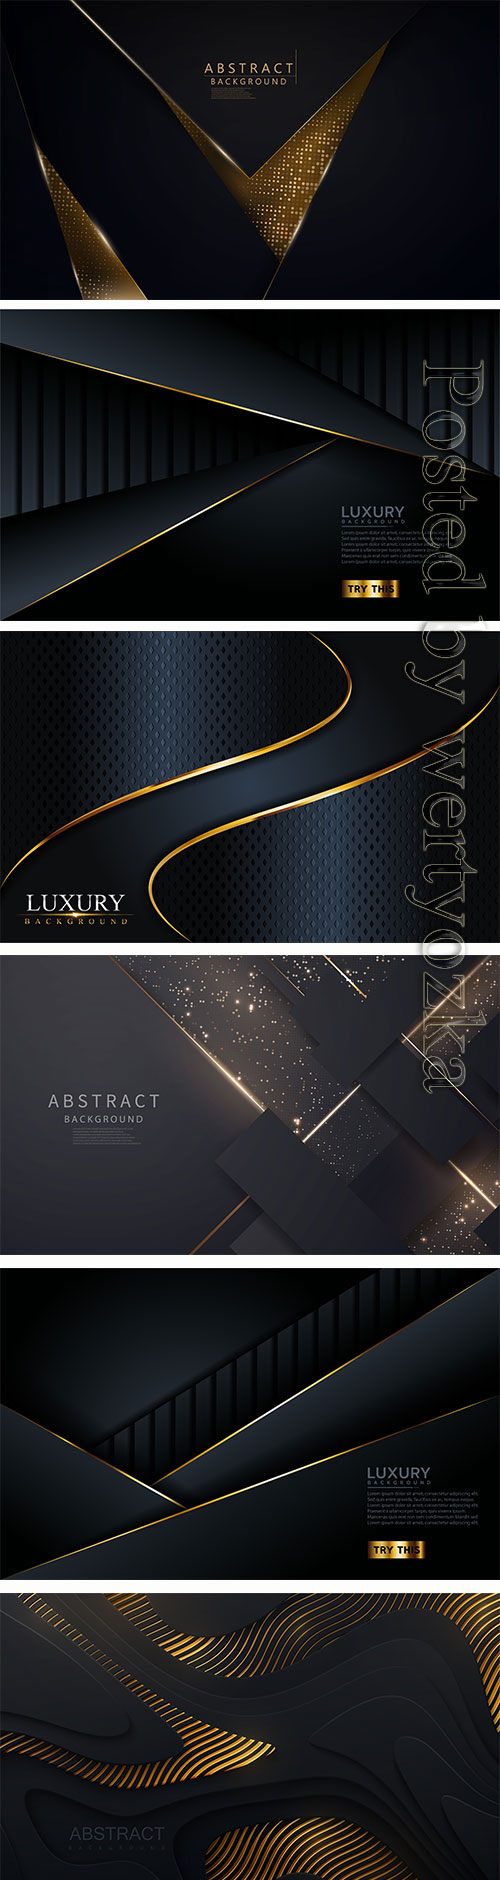 Luxury dark background with golden lines combinations